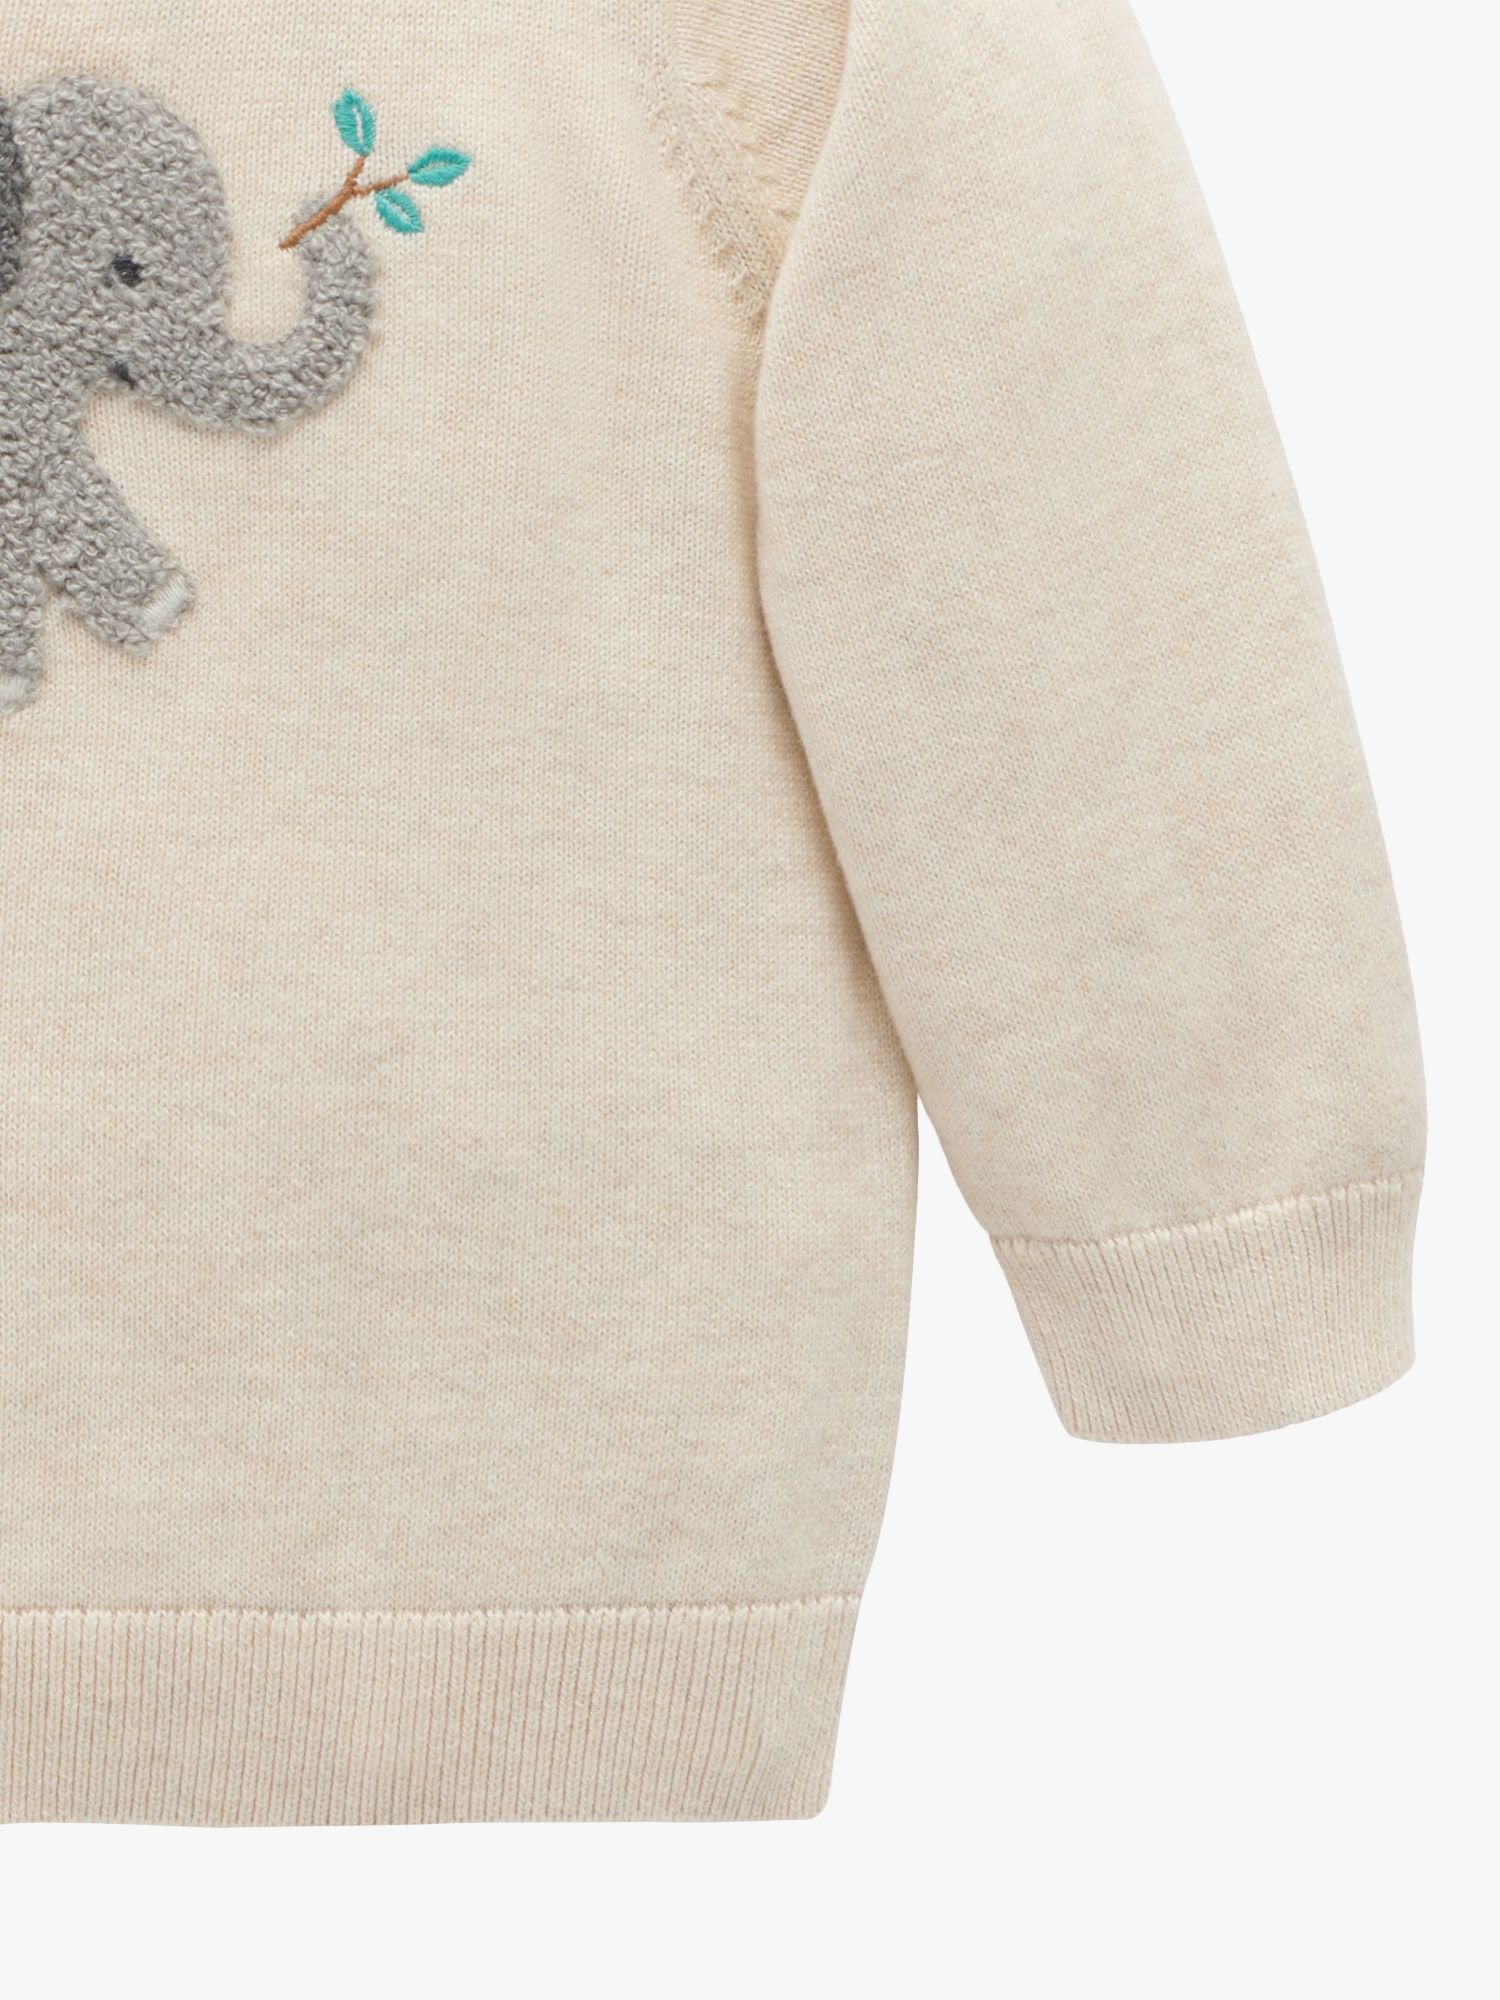 Buy Purebaby Baby Elephant Textured Jumper, Beige/Multi Online at johnlewis.com